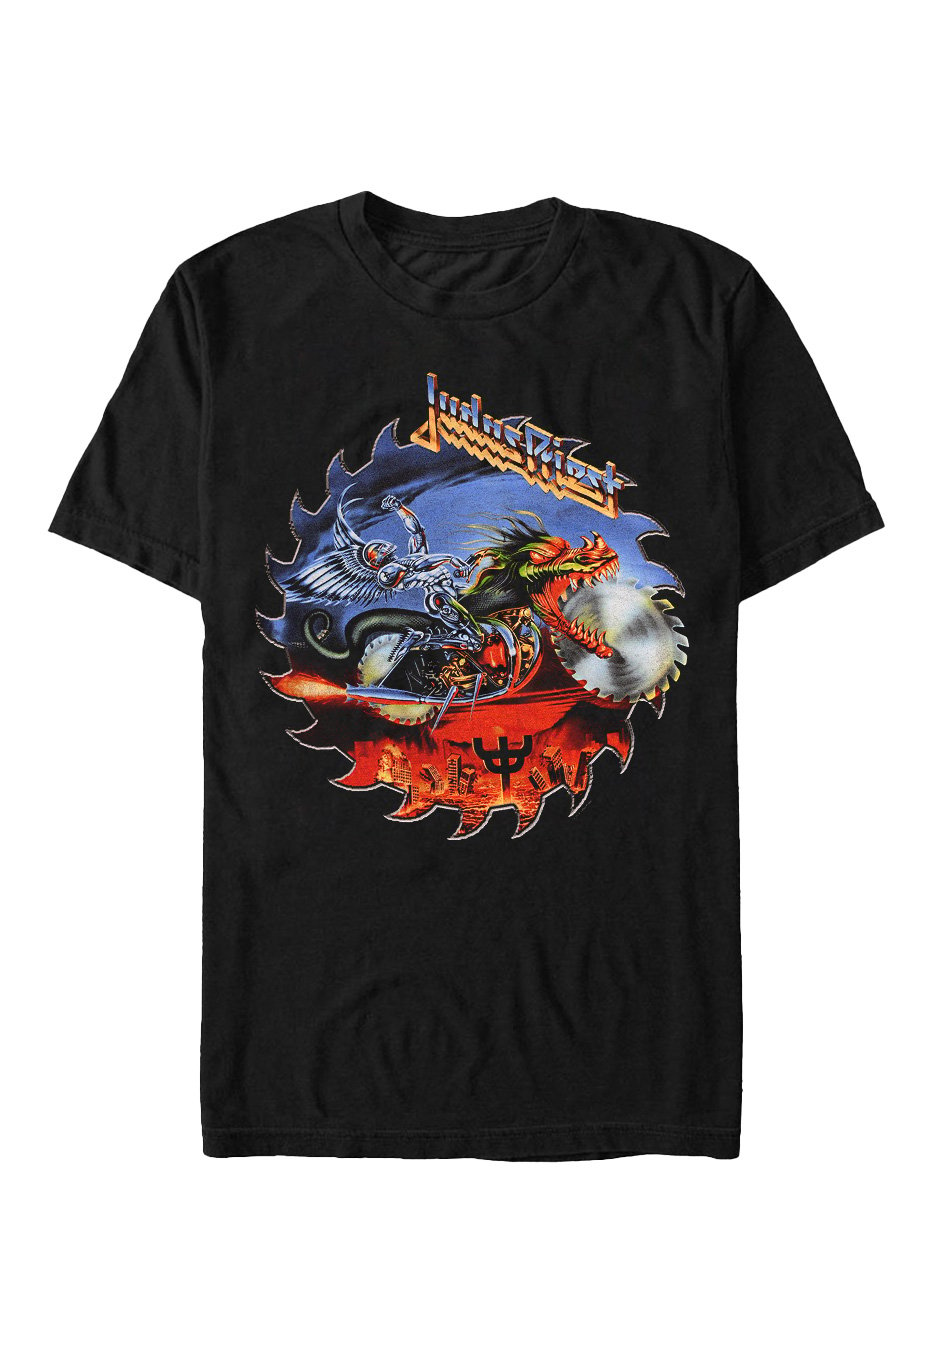 Judas Priest - Buzzsaw - T-Shirt